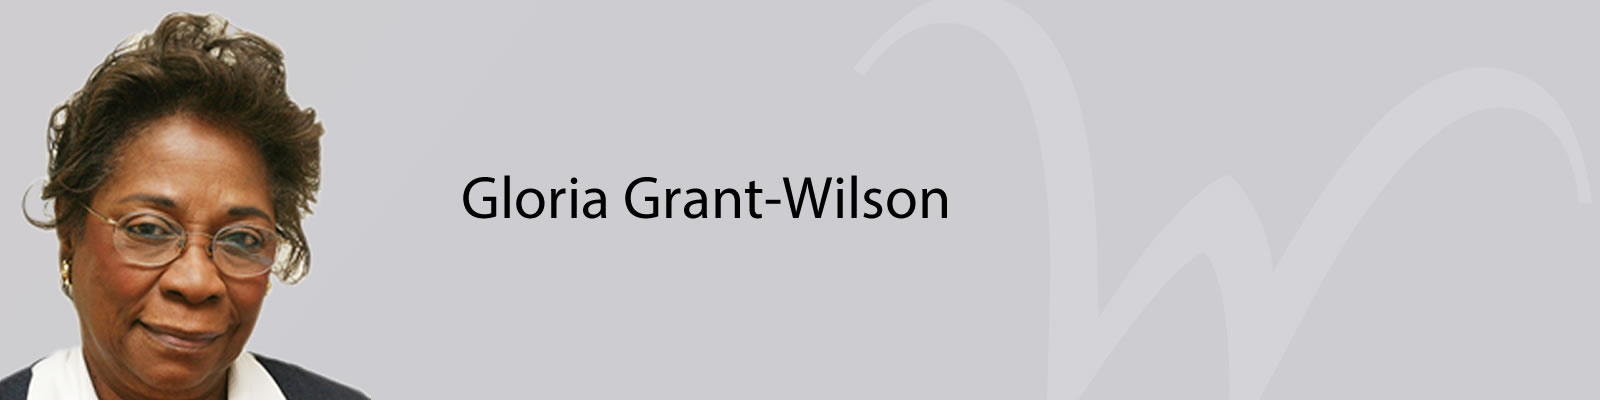 Image of Gloria Grant-Wilson